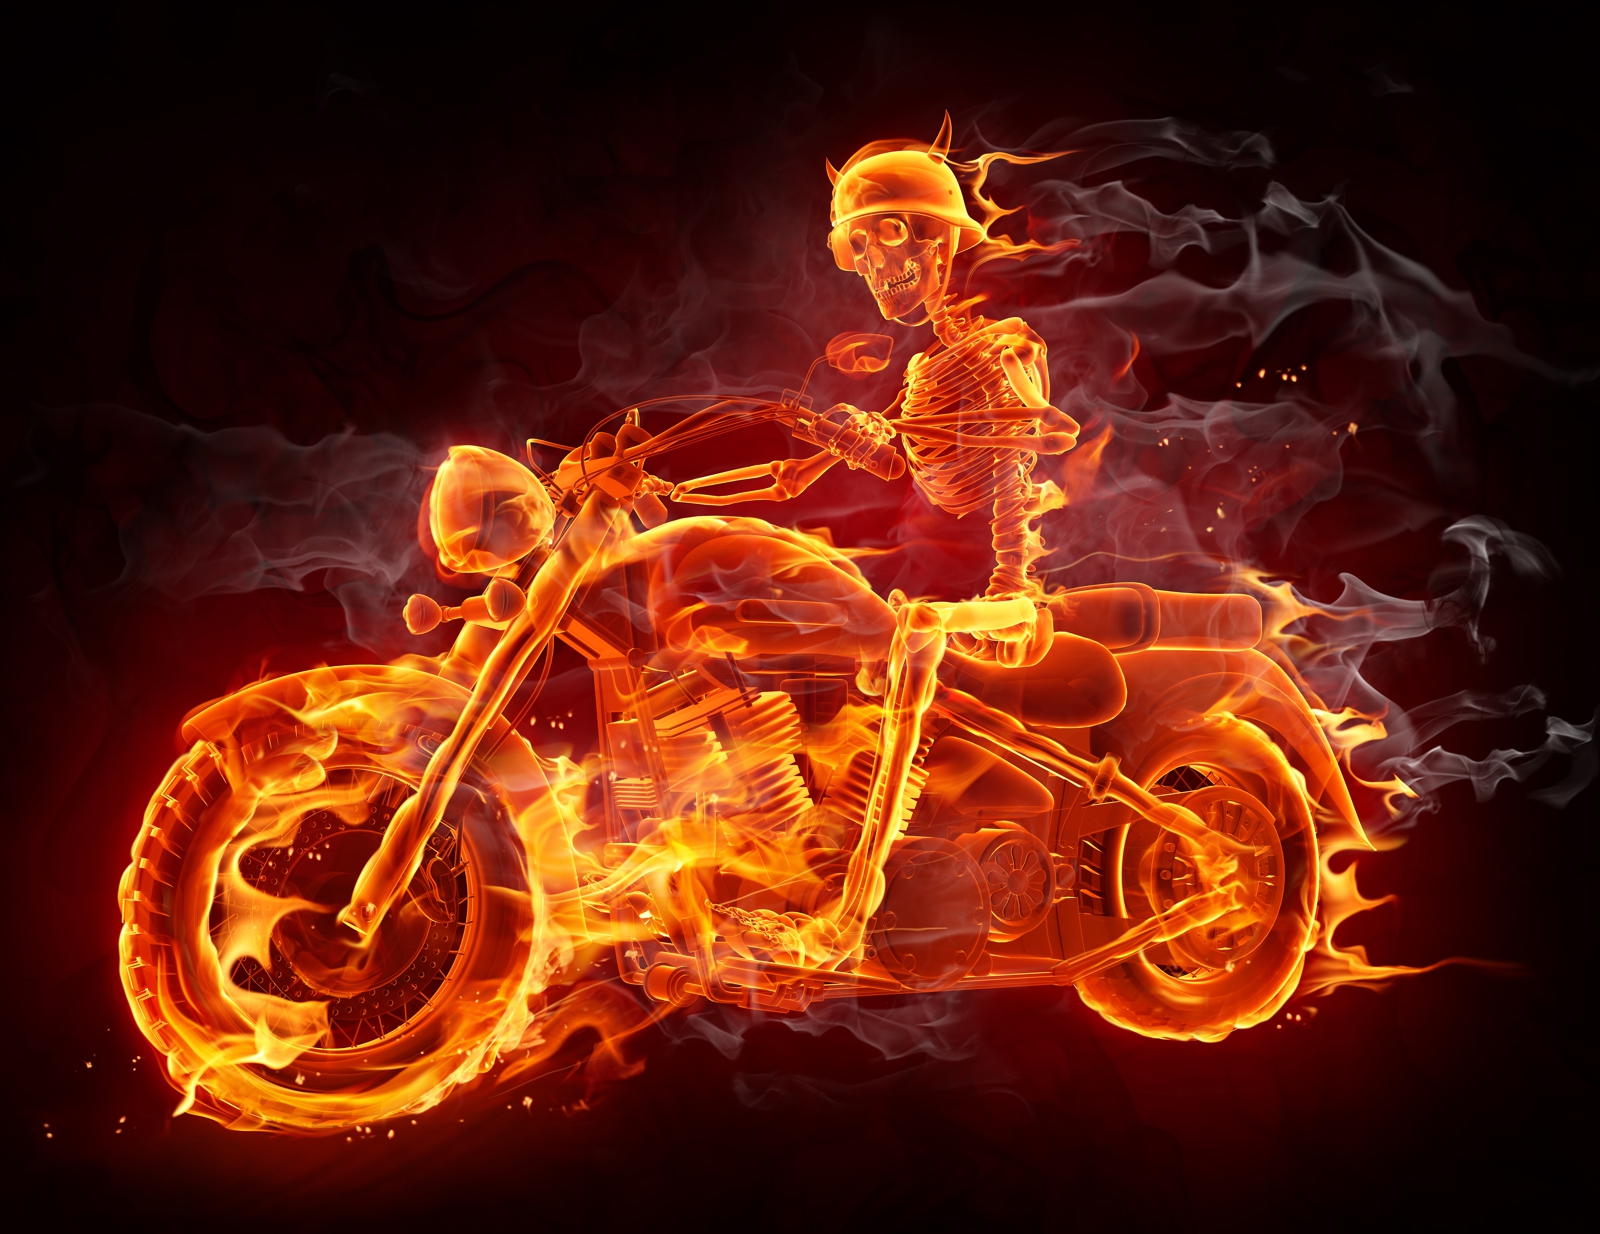 Vlies XXL Poster Fototapete Tapete Flammen Burn Bike